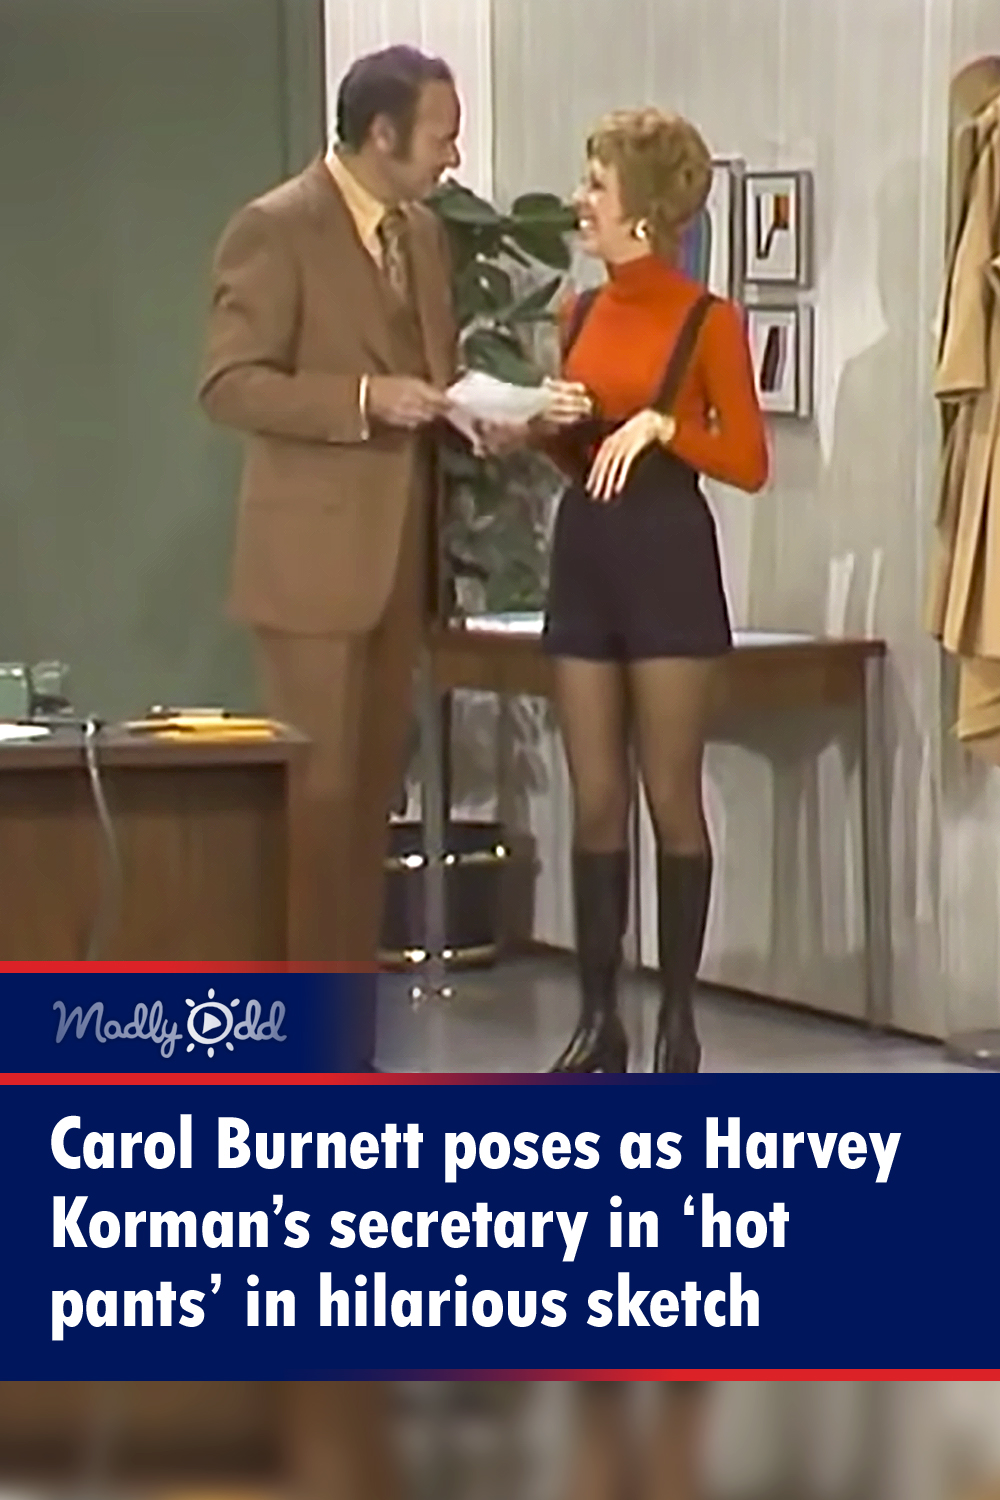 Carol Burnett poses as Harvey Korman’s secretary in ‘hot pants’ in hilarious sketch